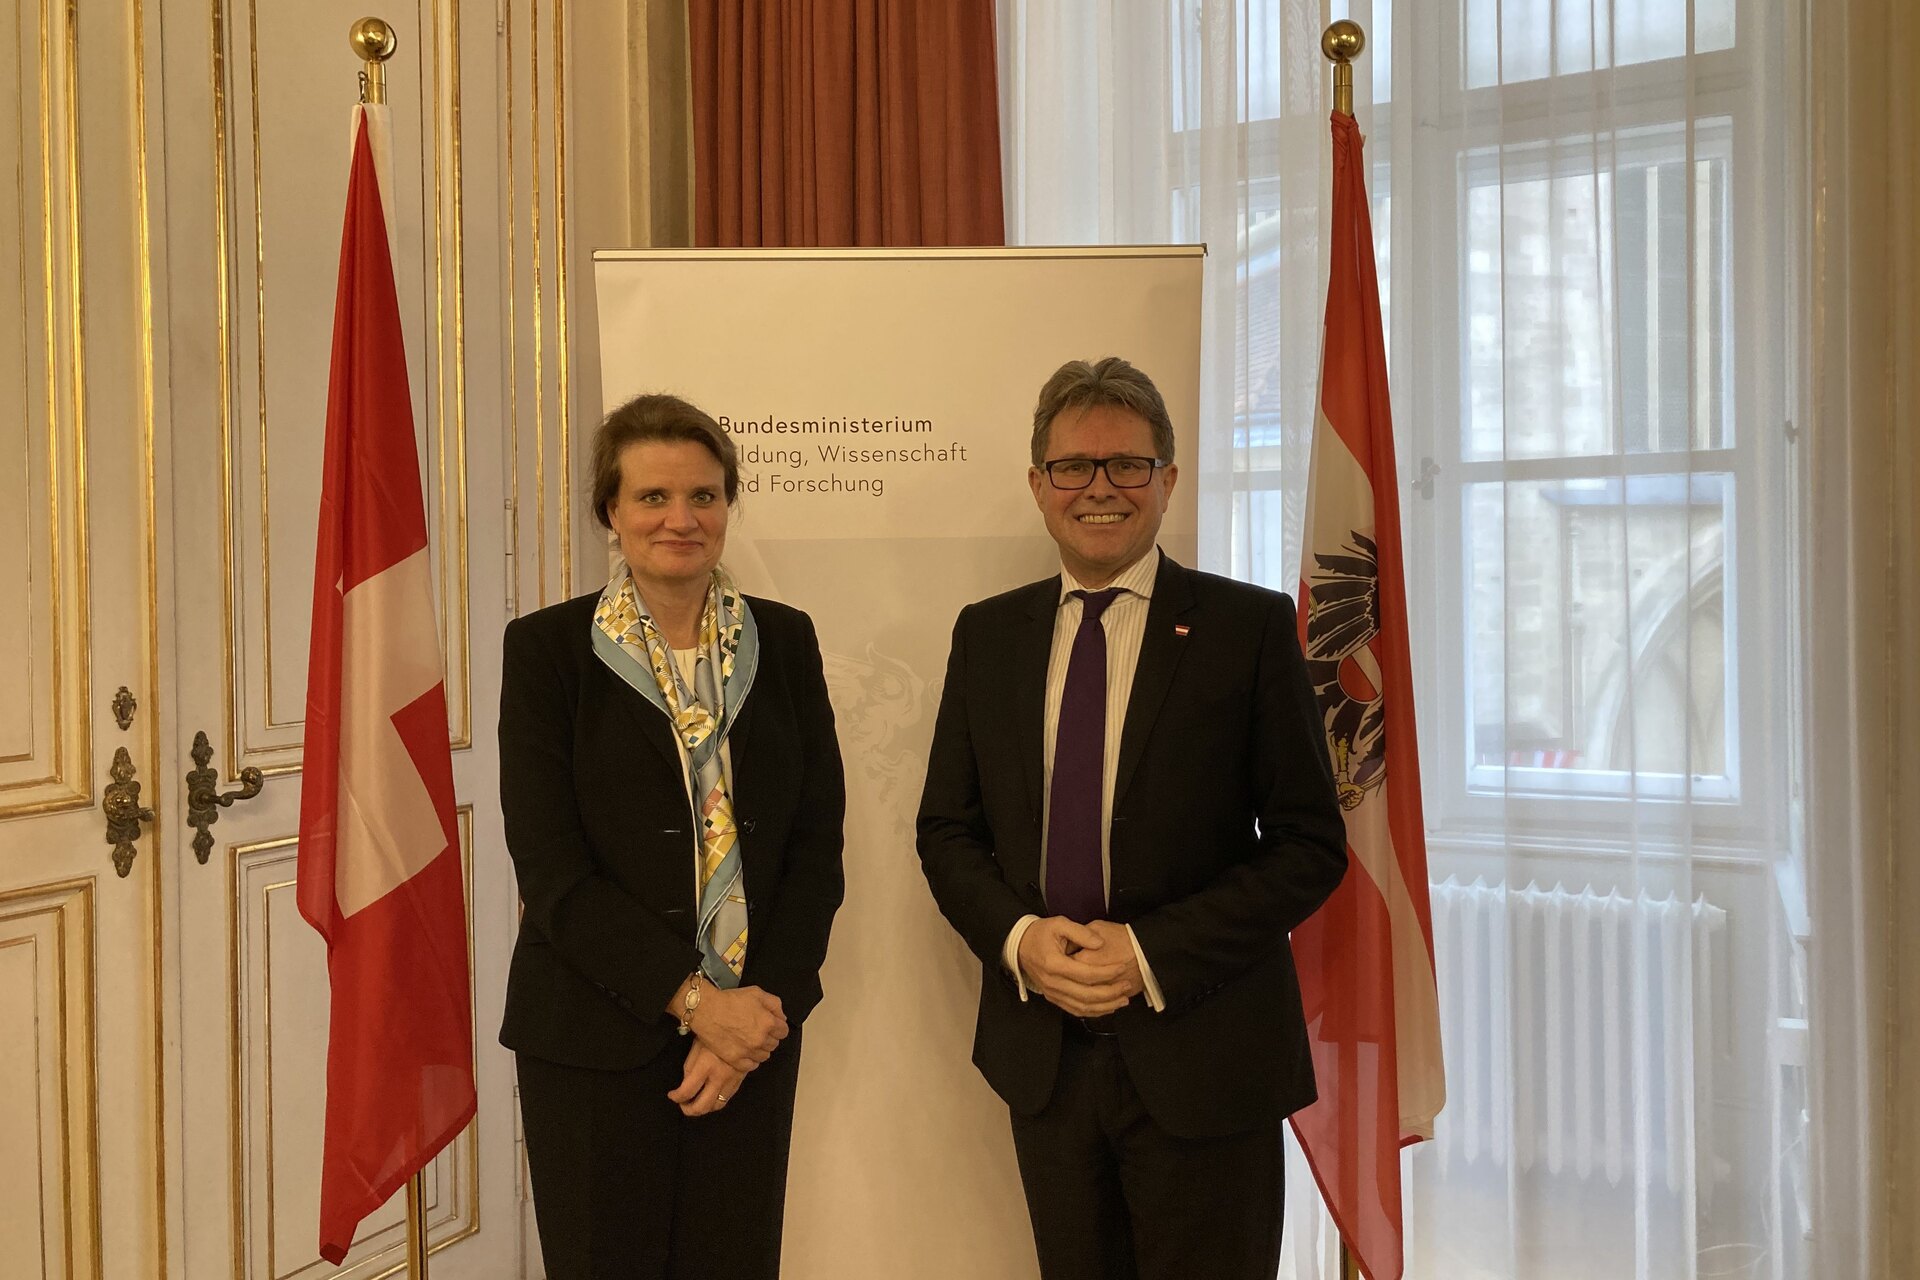 Østrig-Schweiz-mødet den 16. november 2022 mellem Martina Hirayama og Martin Polaschek